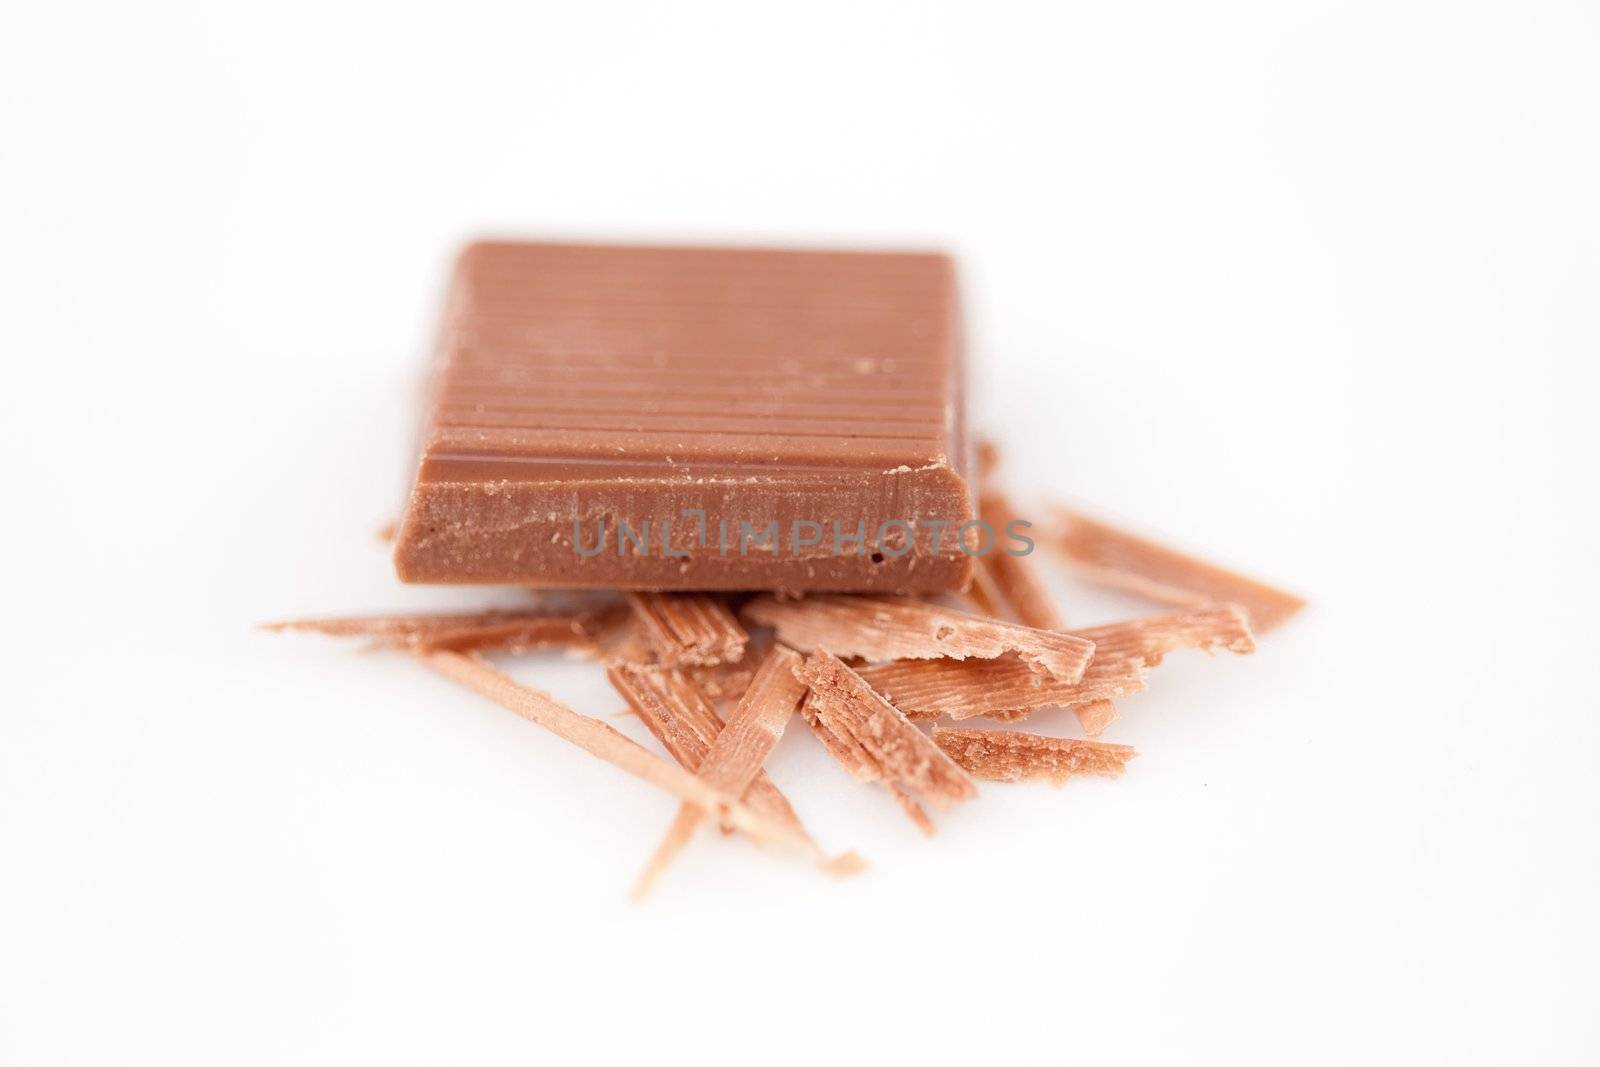 Piece of chocolate on chocolate shavings by Wavebreakmedia